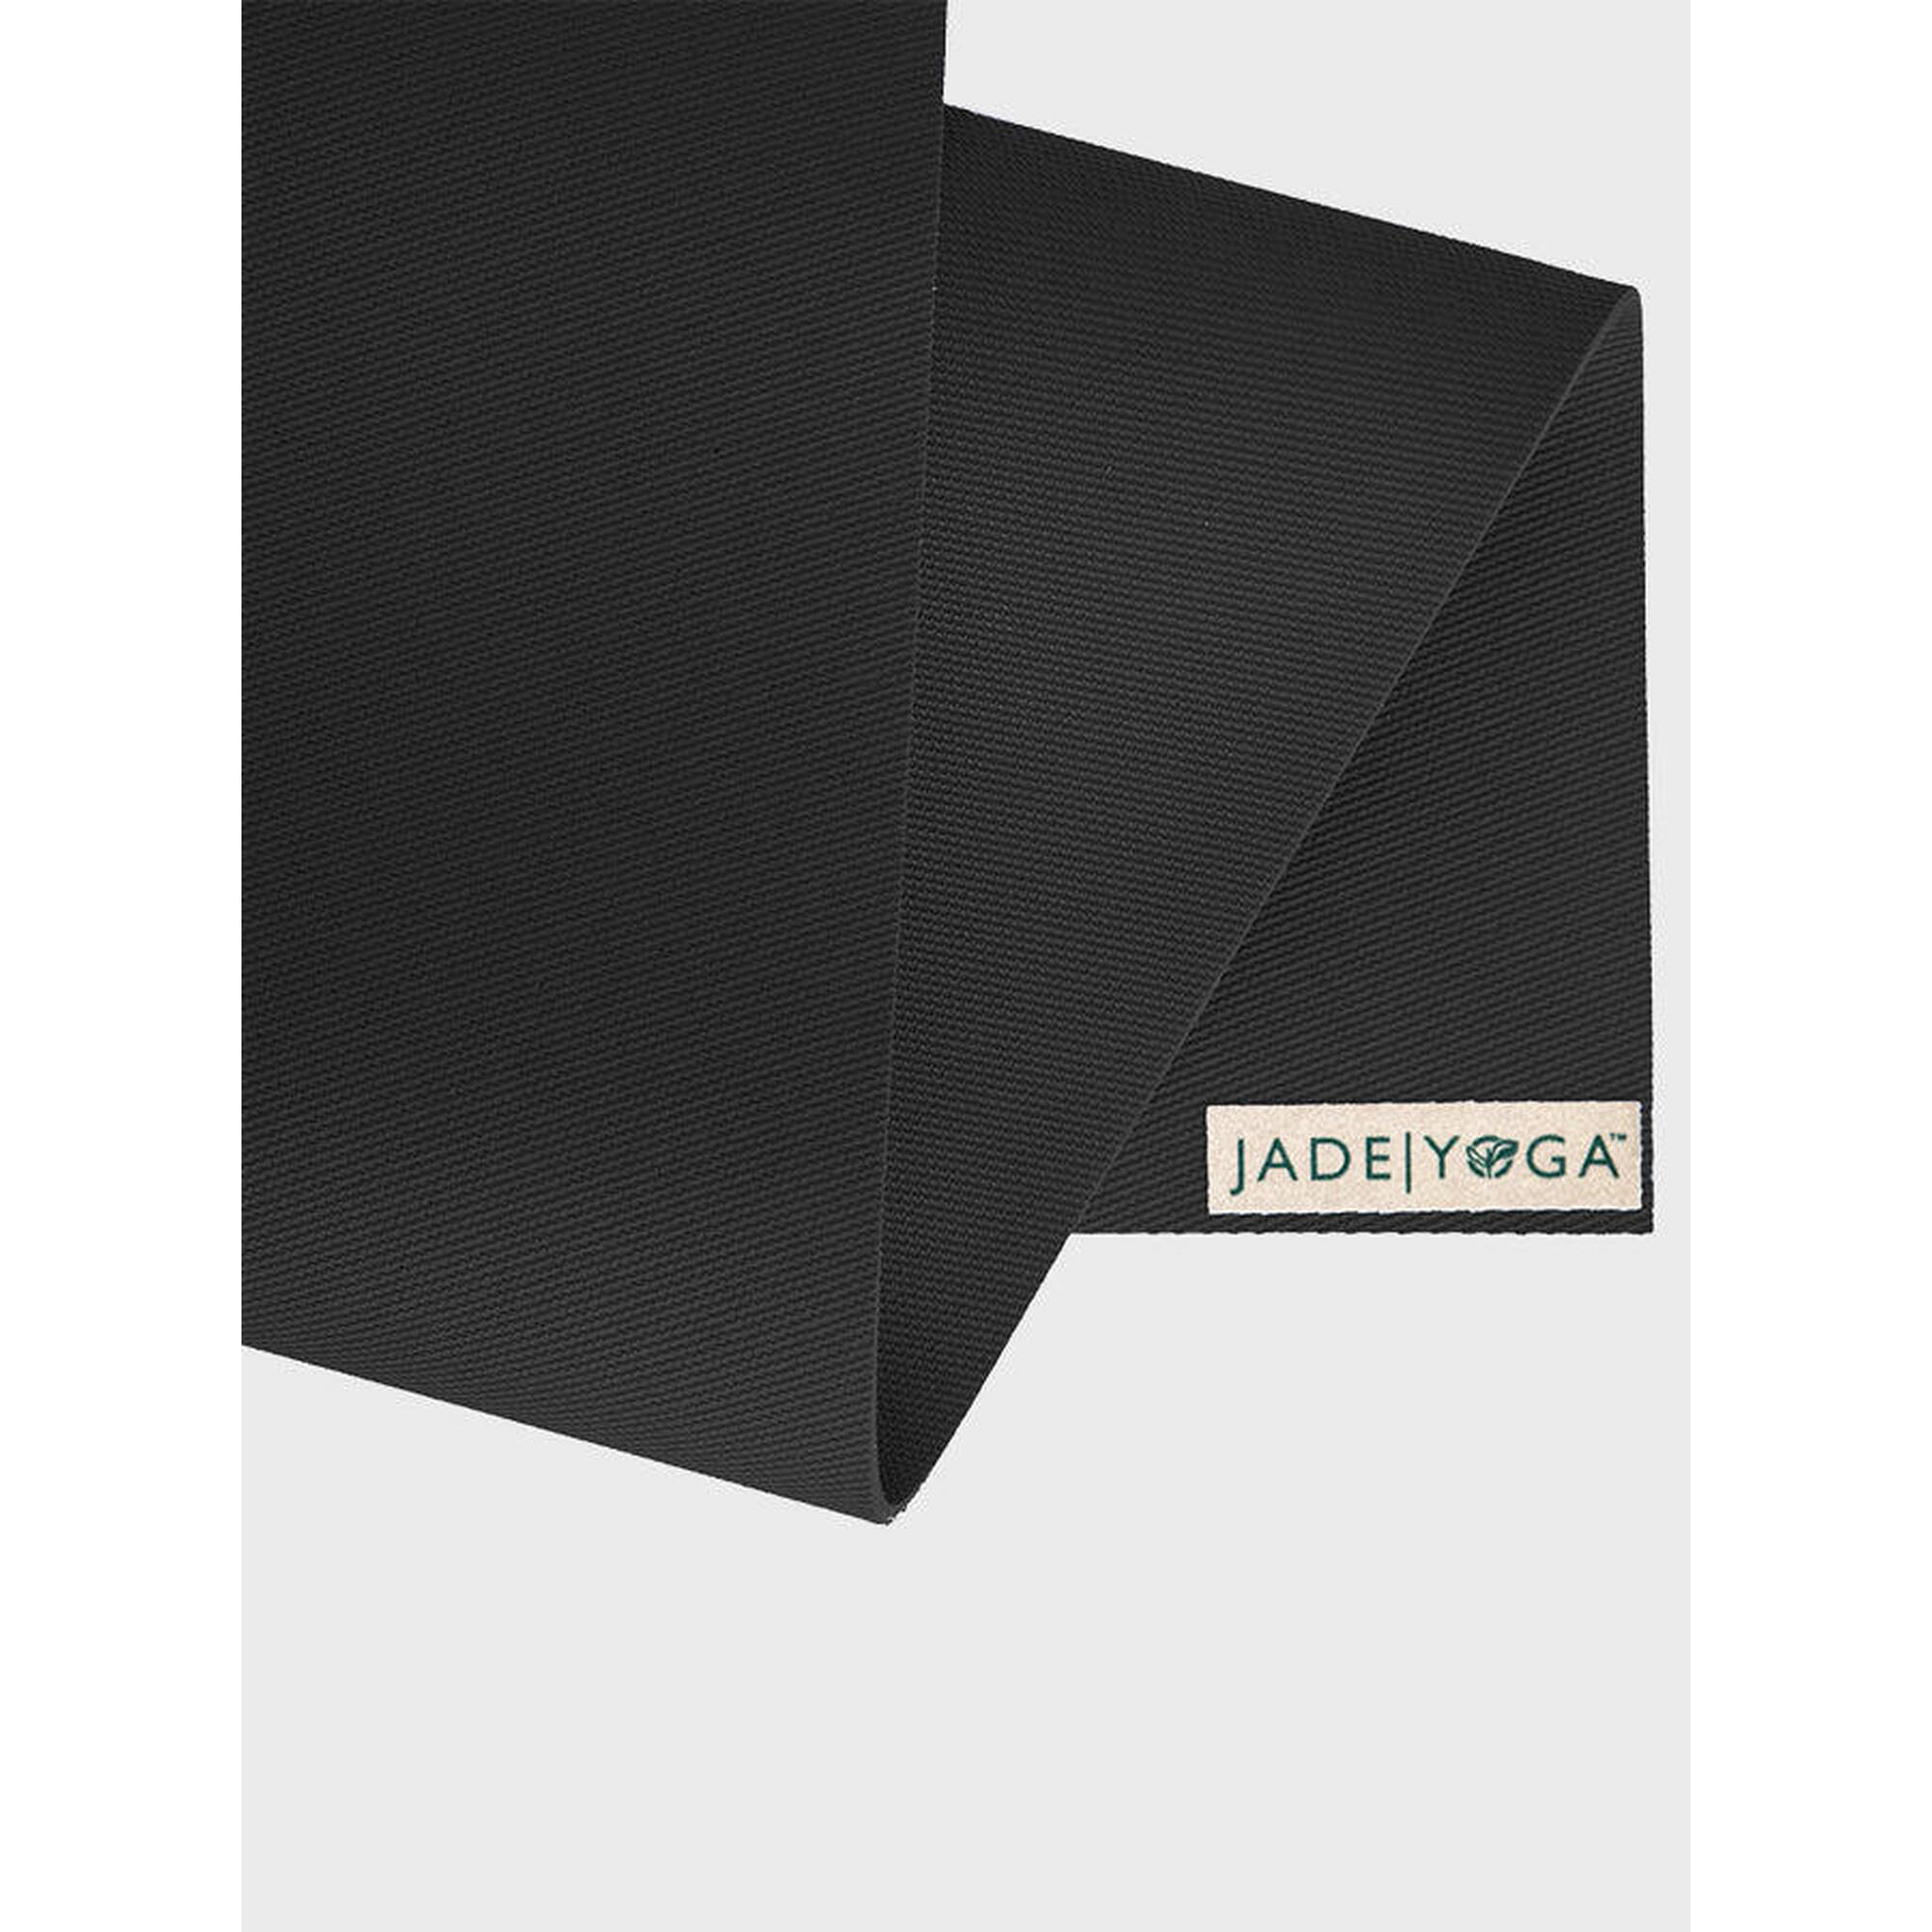 Jade Yoga Harmony 68 Inch Yoga Mat 5mm - Black 1/1